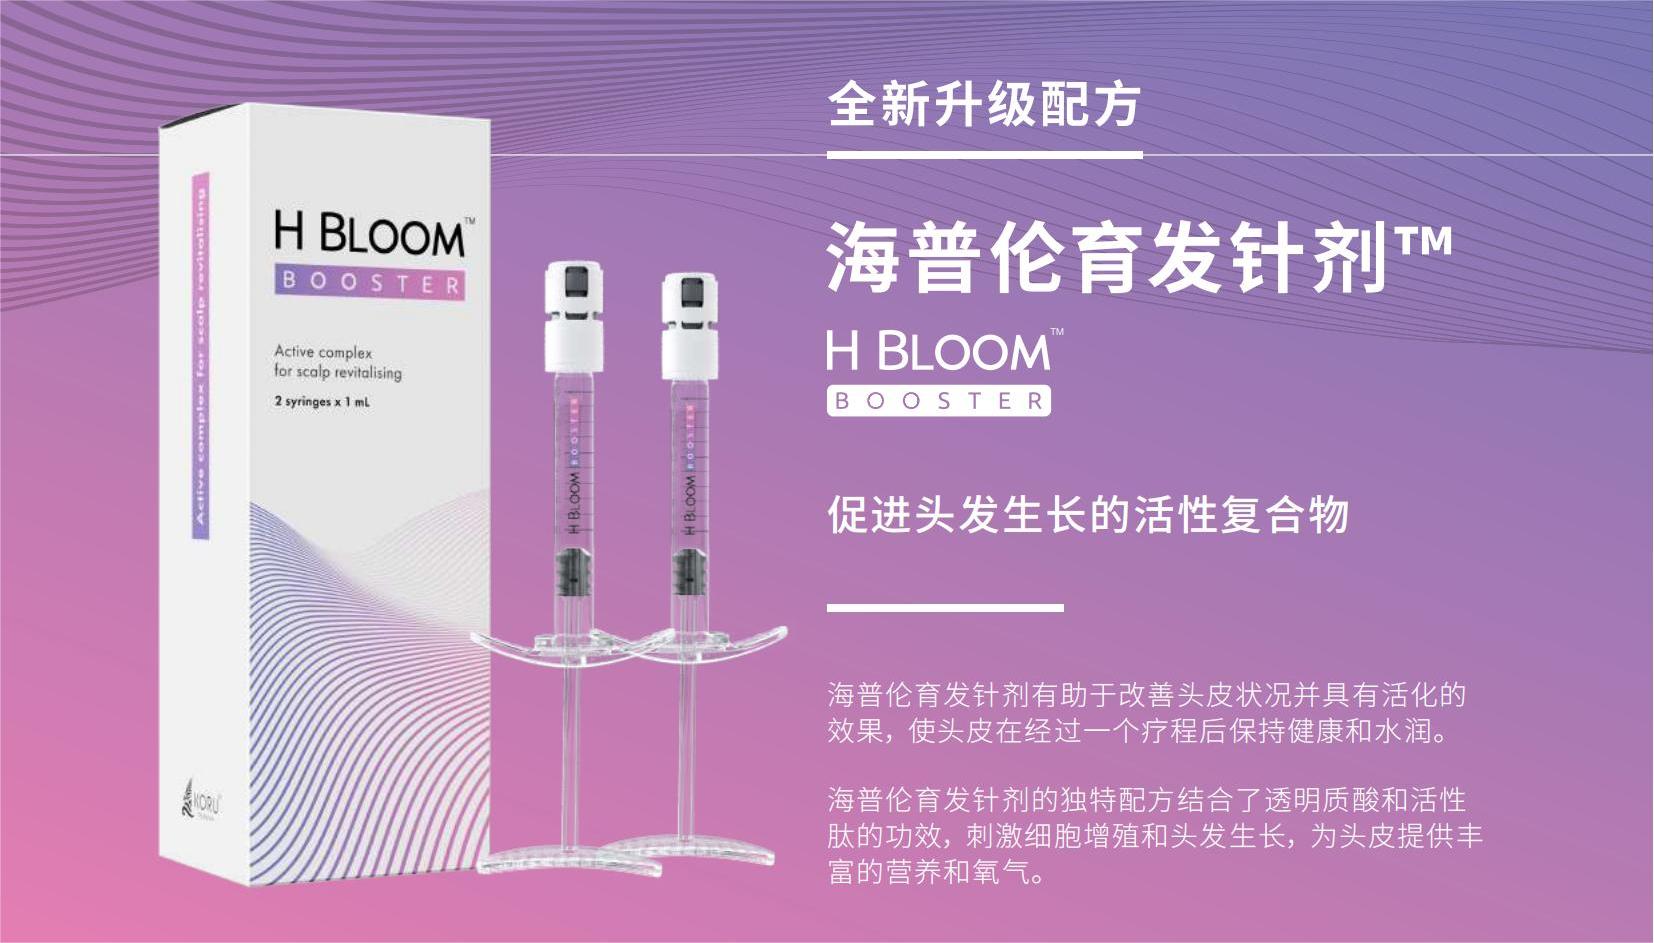 20230627_H Bloom Booster_Mini Banner_CHN_compressed_00.jpg